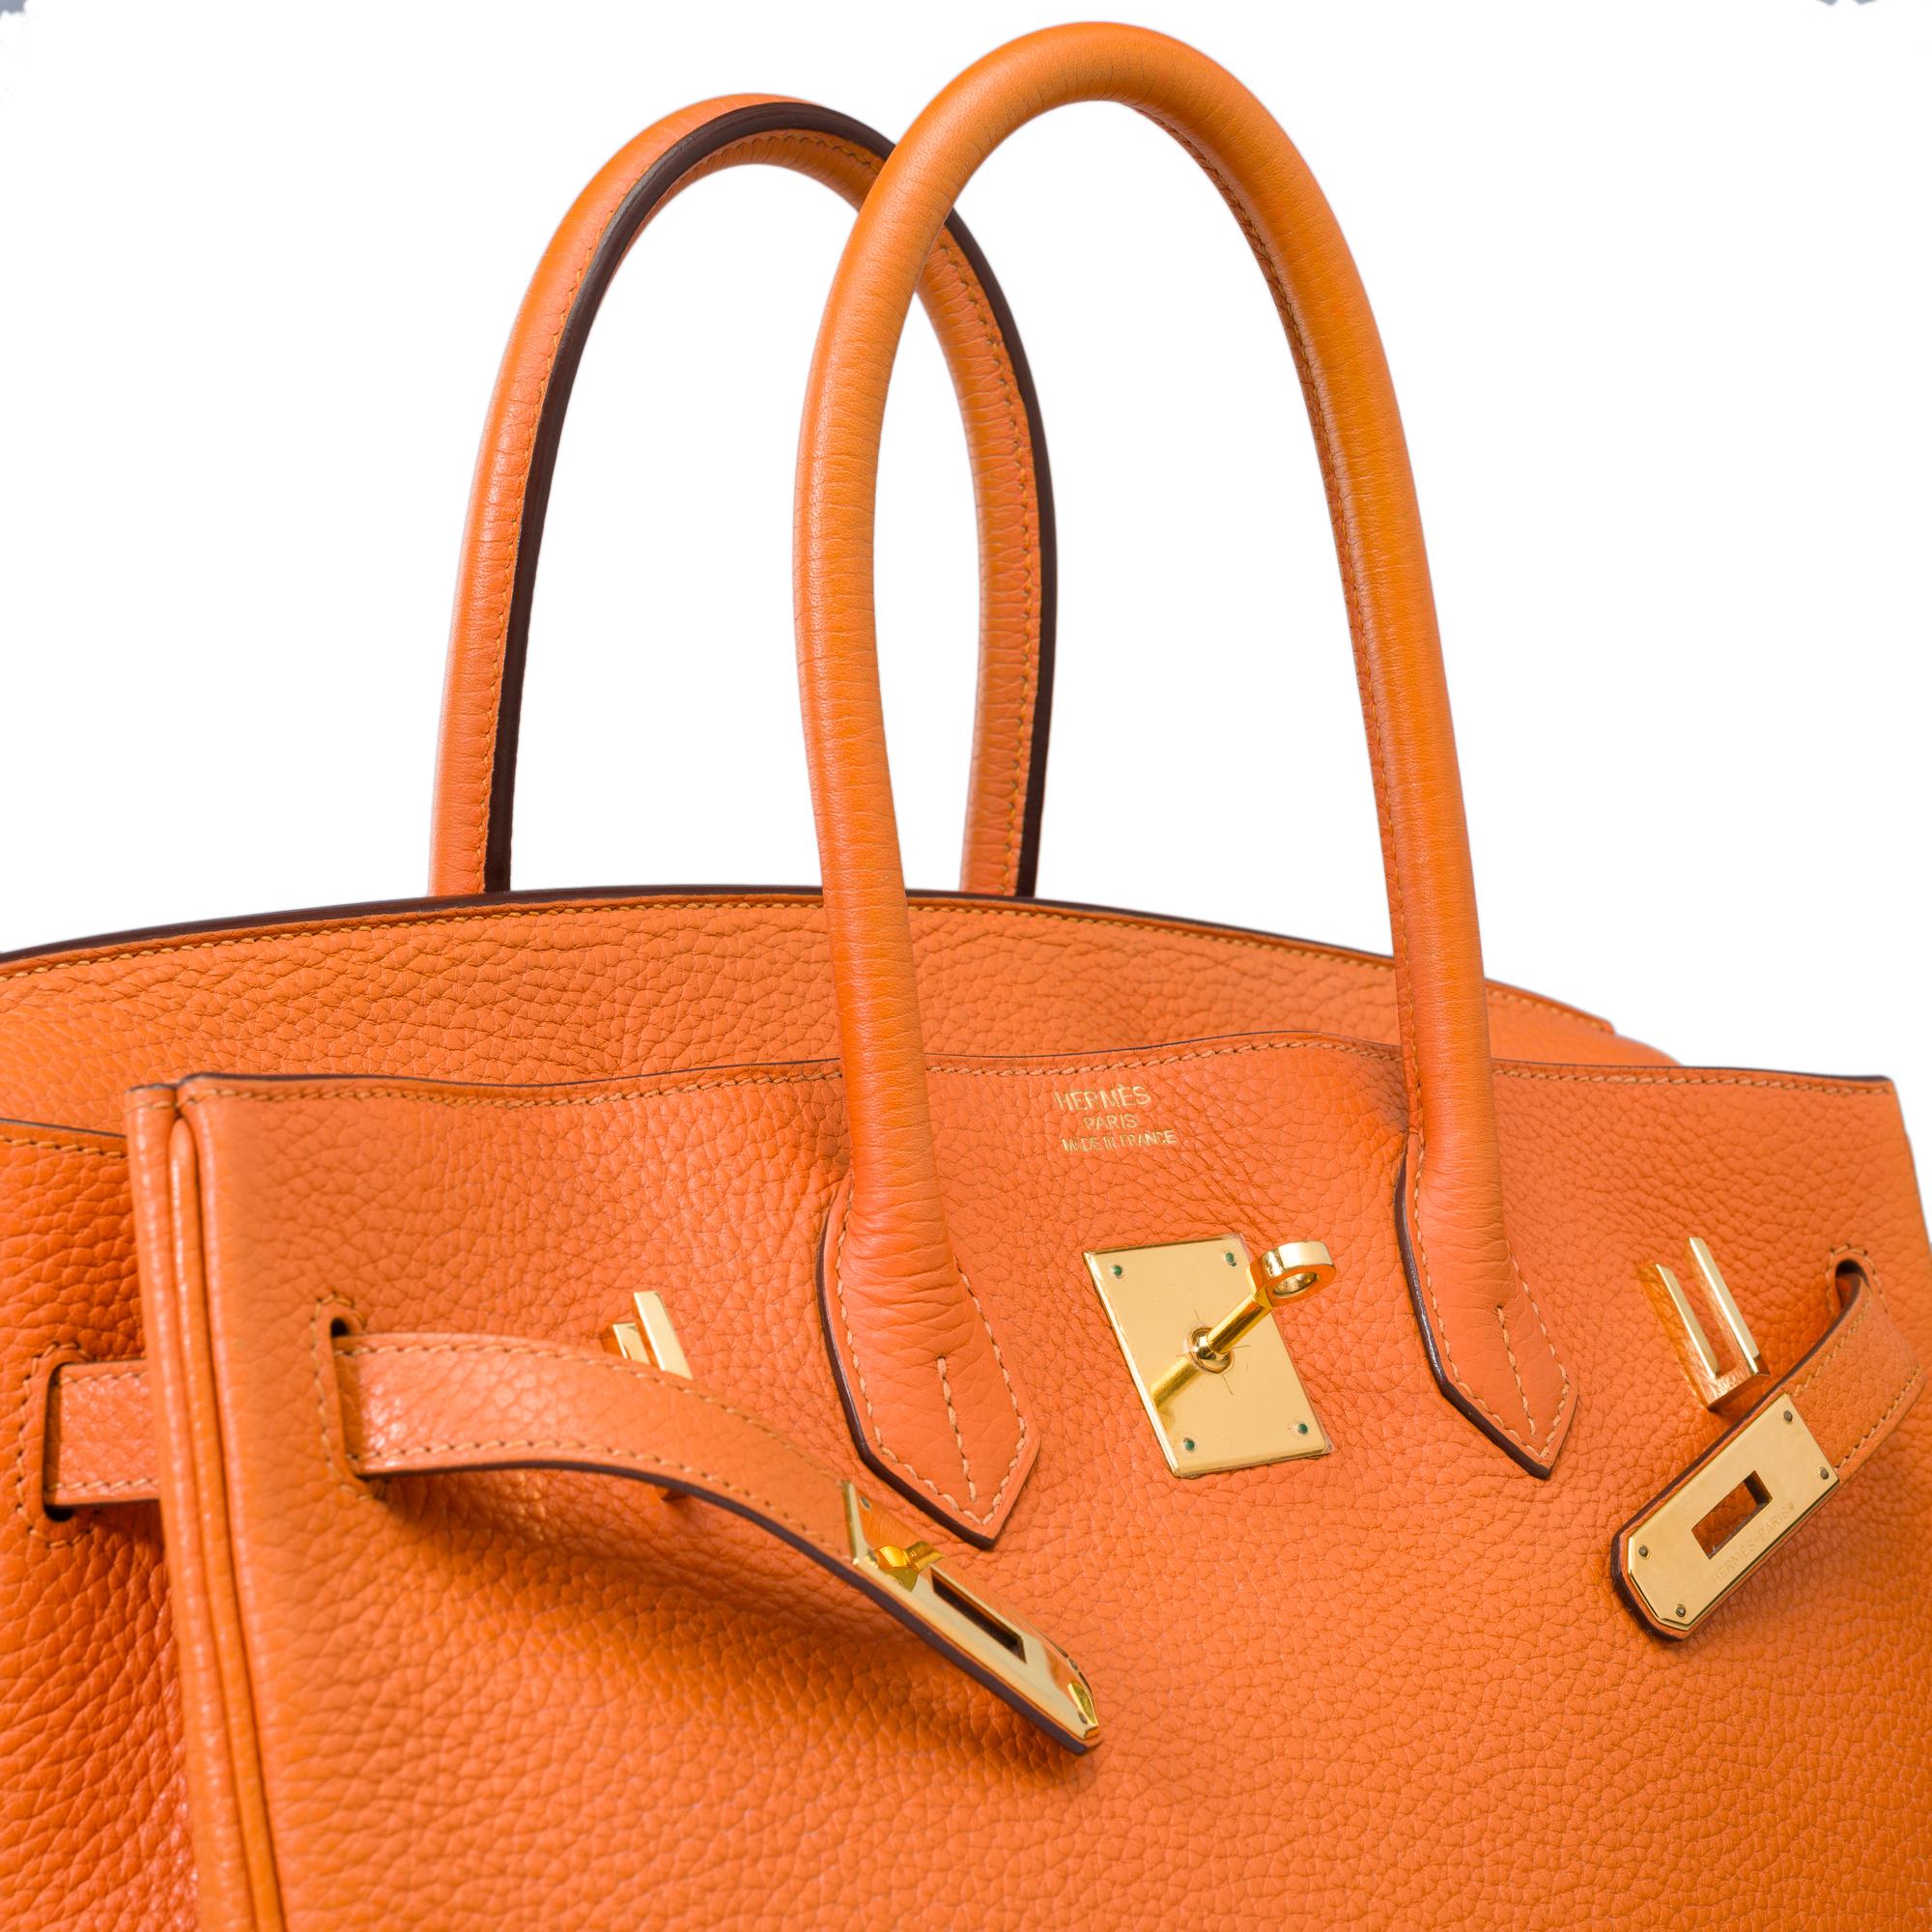 Amazing Hermès Birkin 35 handbag in Orange Togo Calf leather, GHW 2